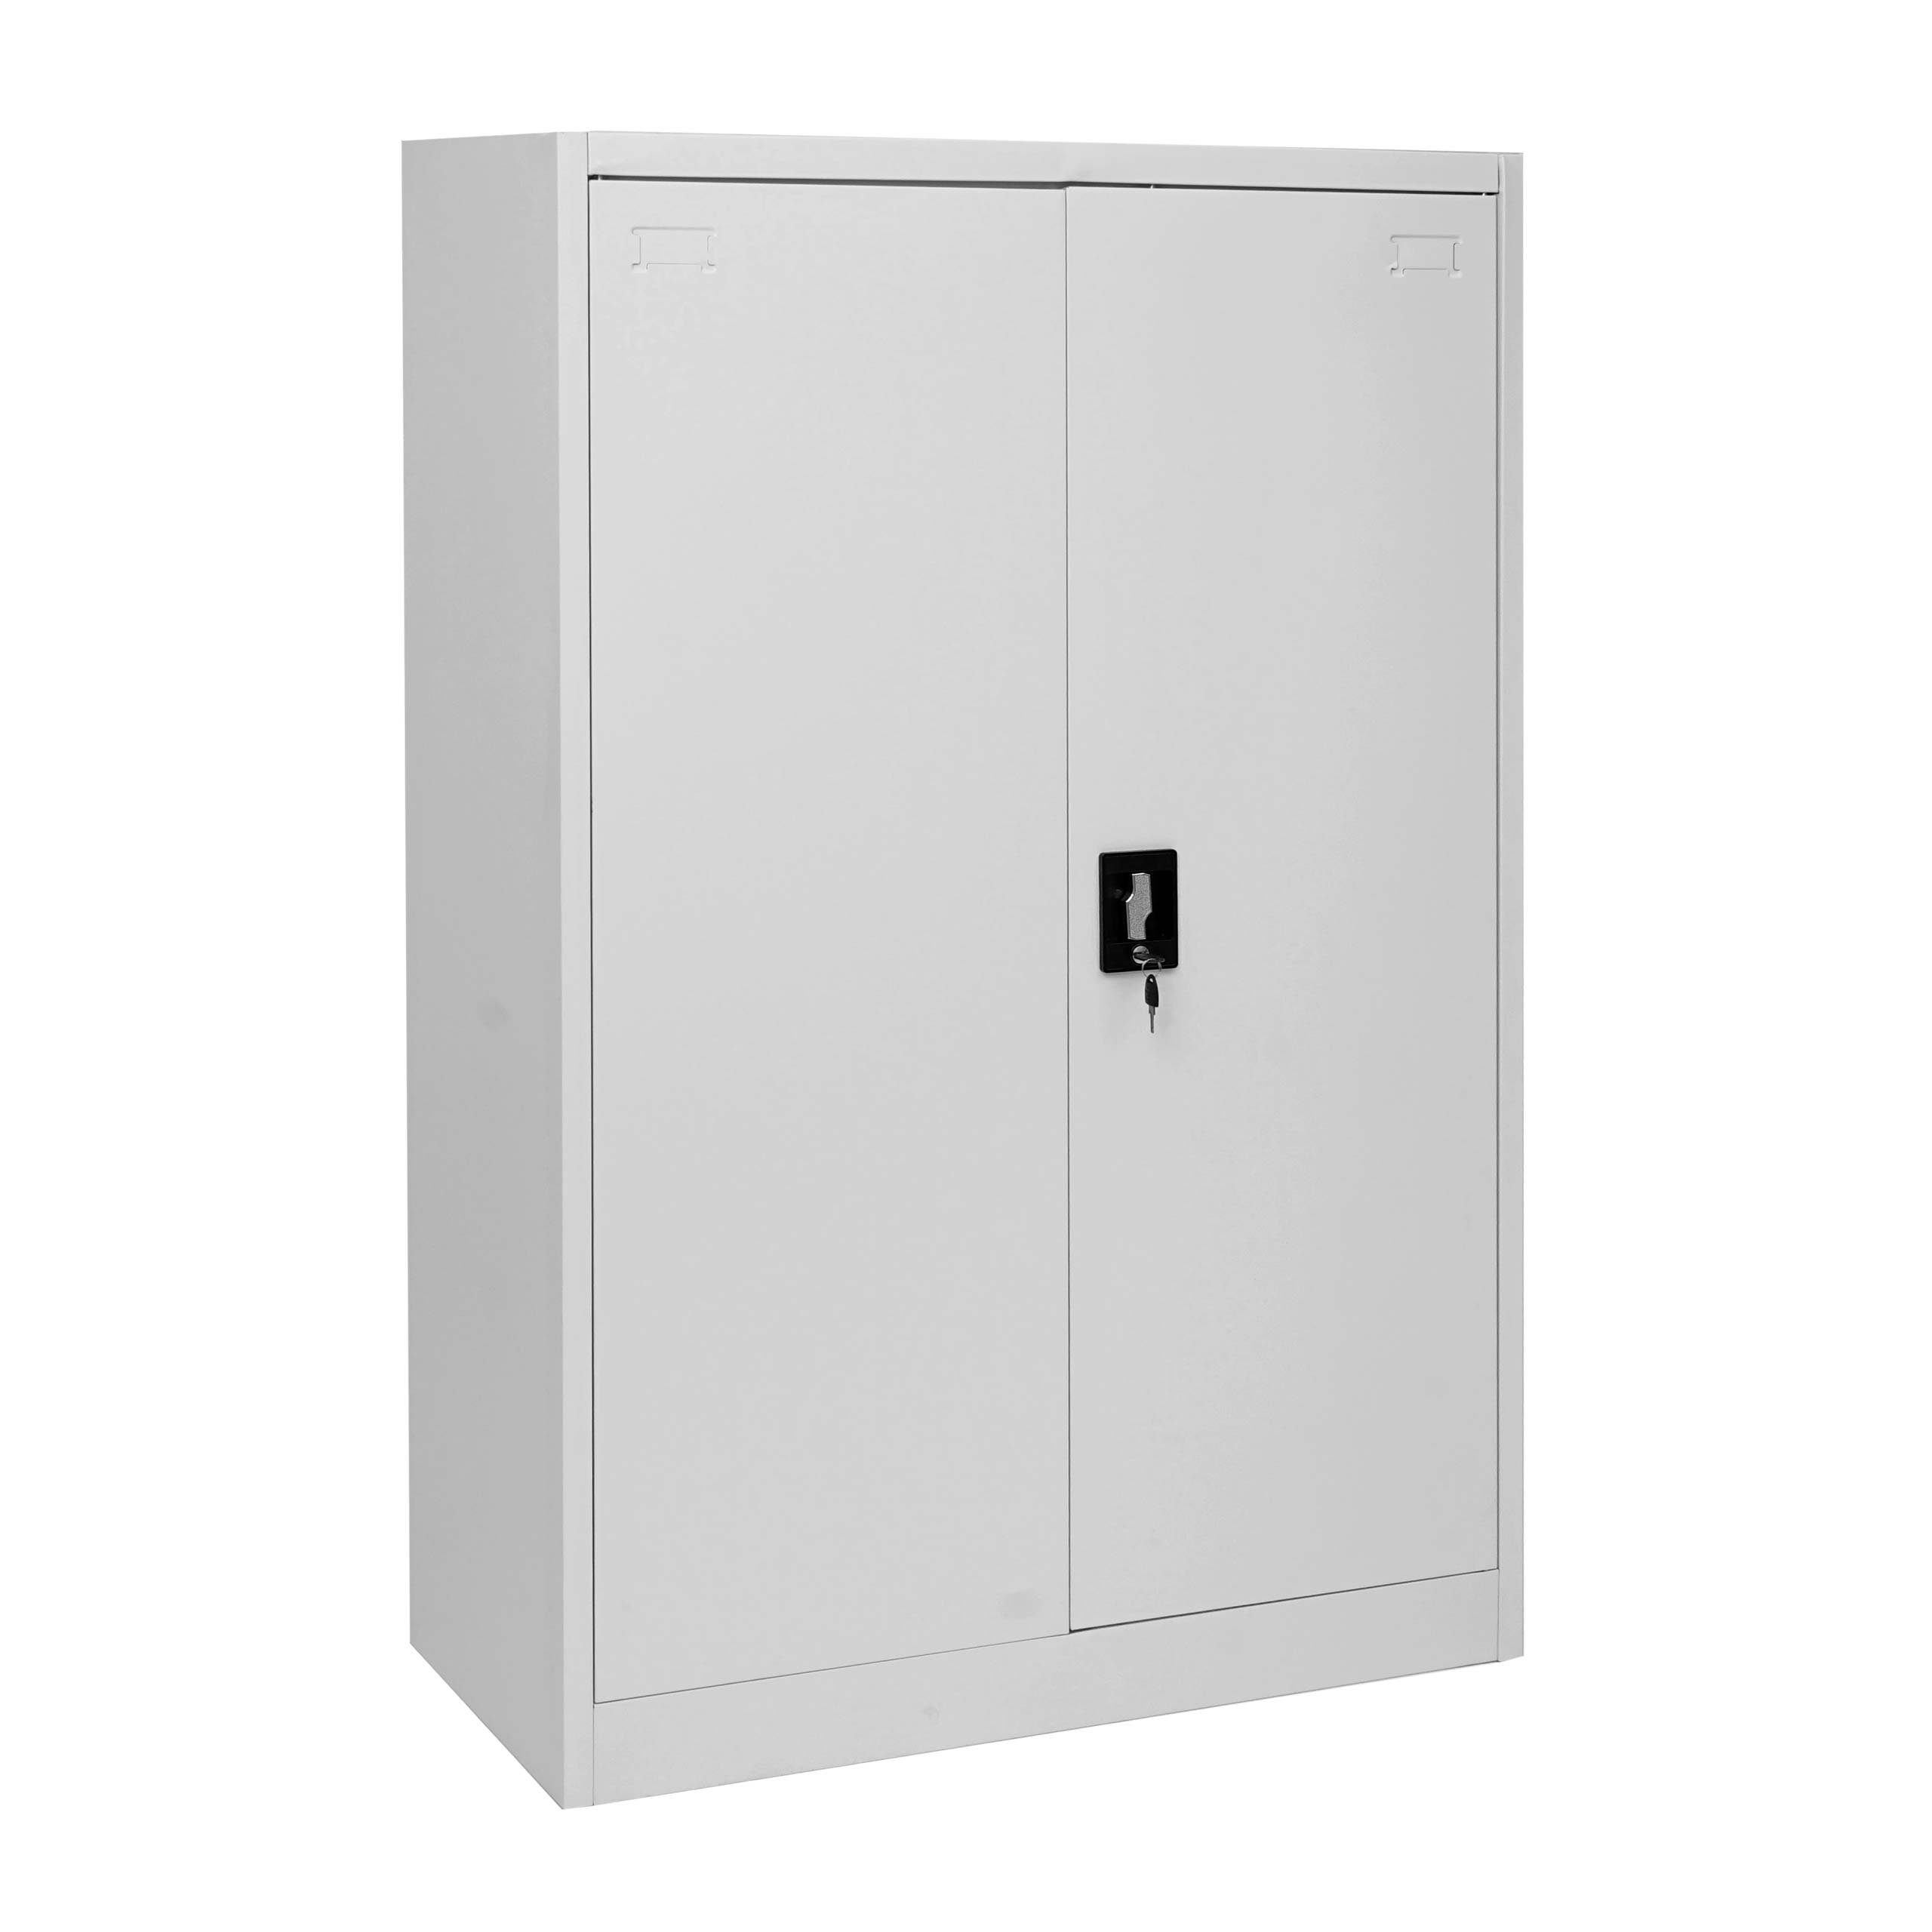 Türen | verstellbare zwei grau MCW-H17 grau Aktenschrank MCW Regalböden, Abschließbar,